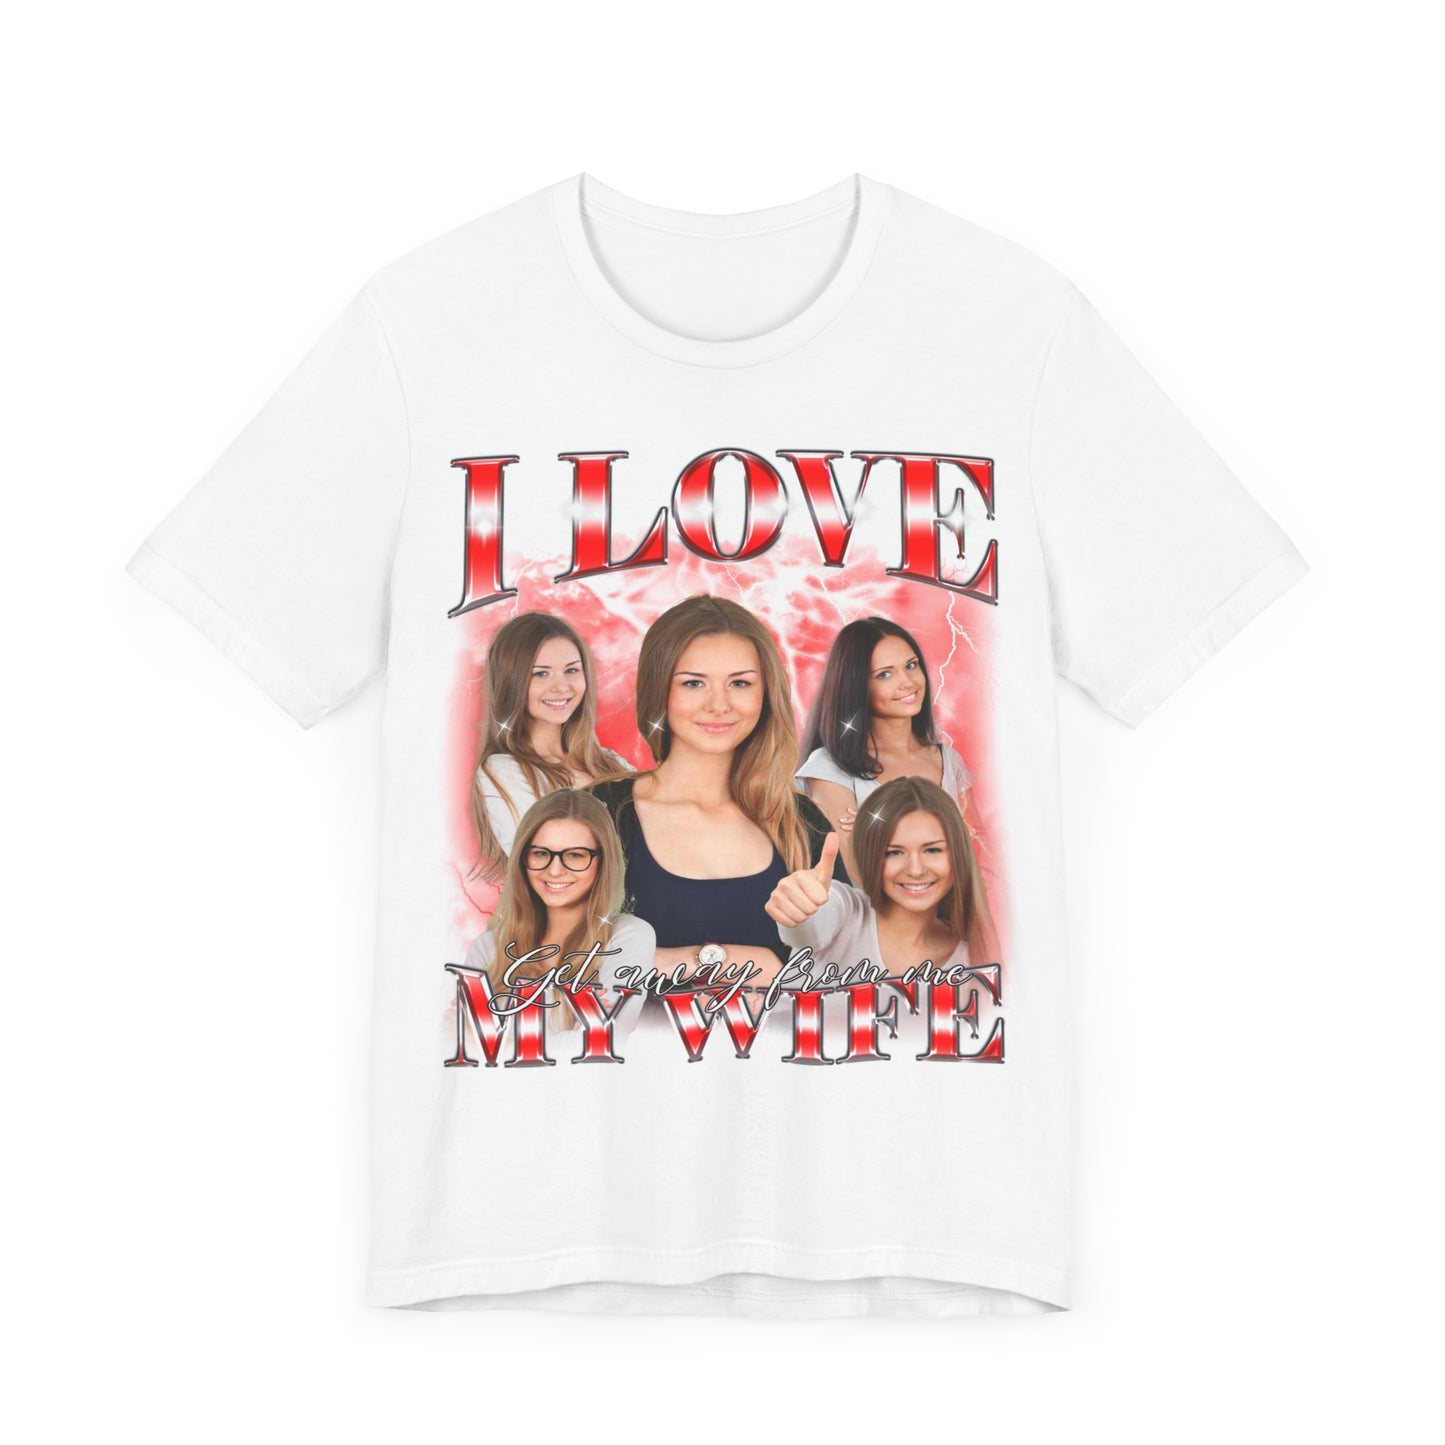 I Love My Wife Get Away From Me Shirt, Custom Wife Photo Shirt, Custom Bootleg Rap Tee, Vintage Graphic 90s Tshirt, Valentine's Shirt, T1903